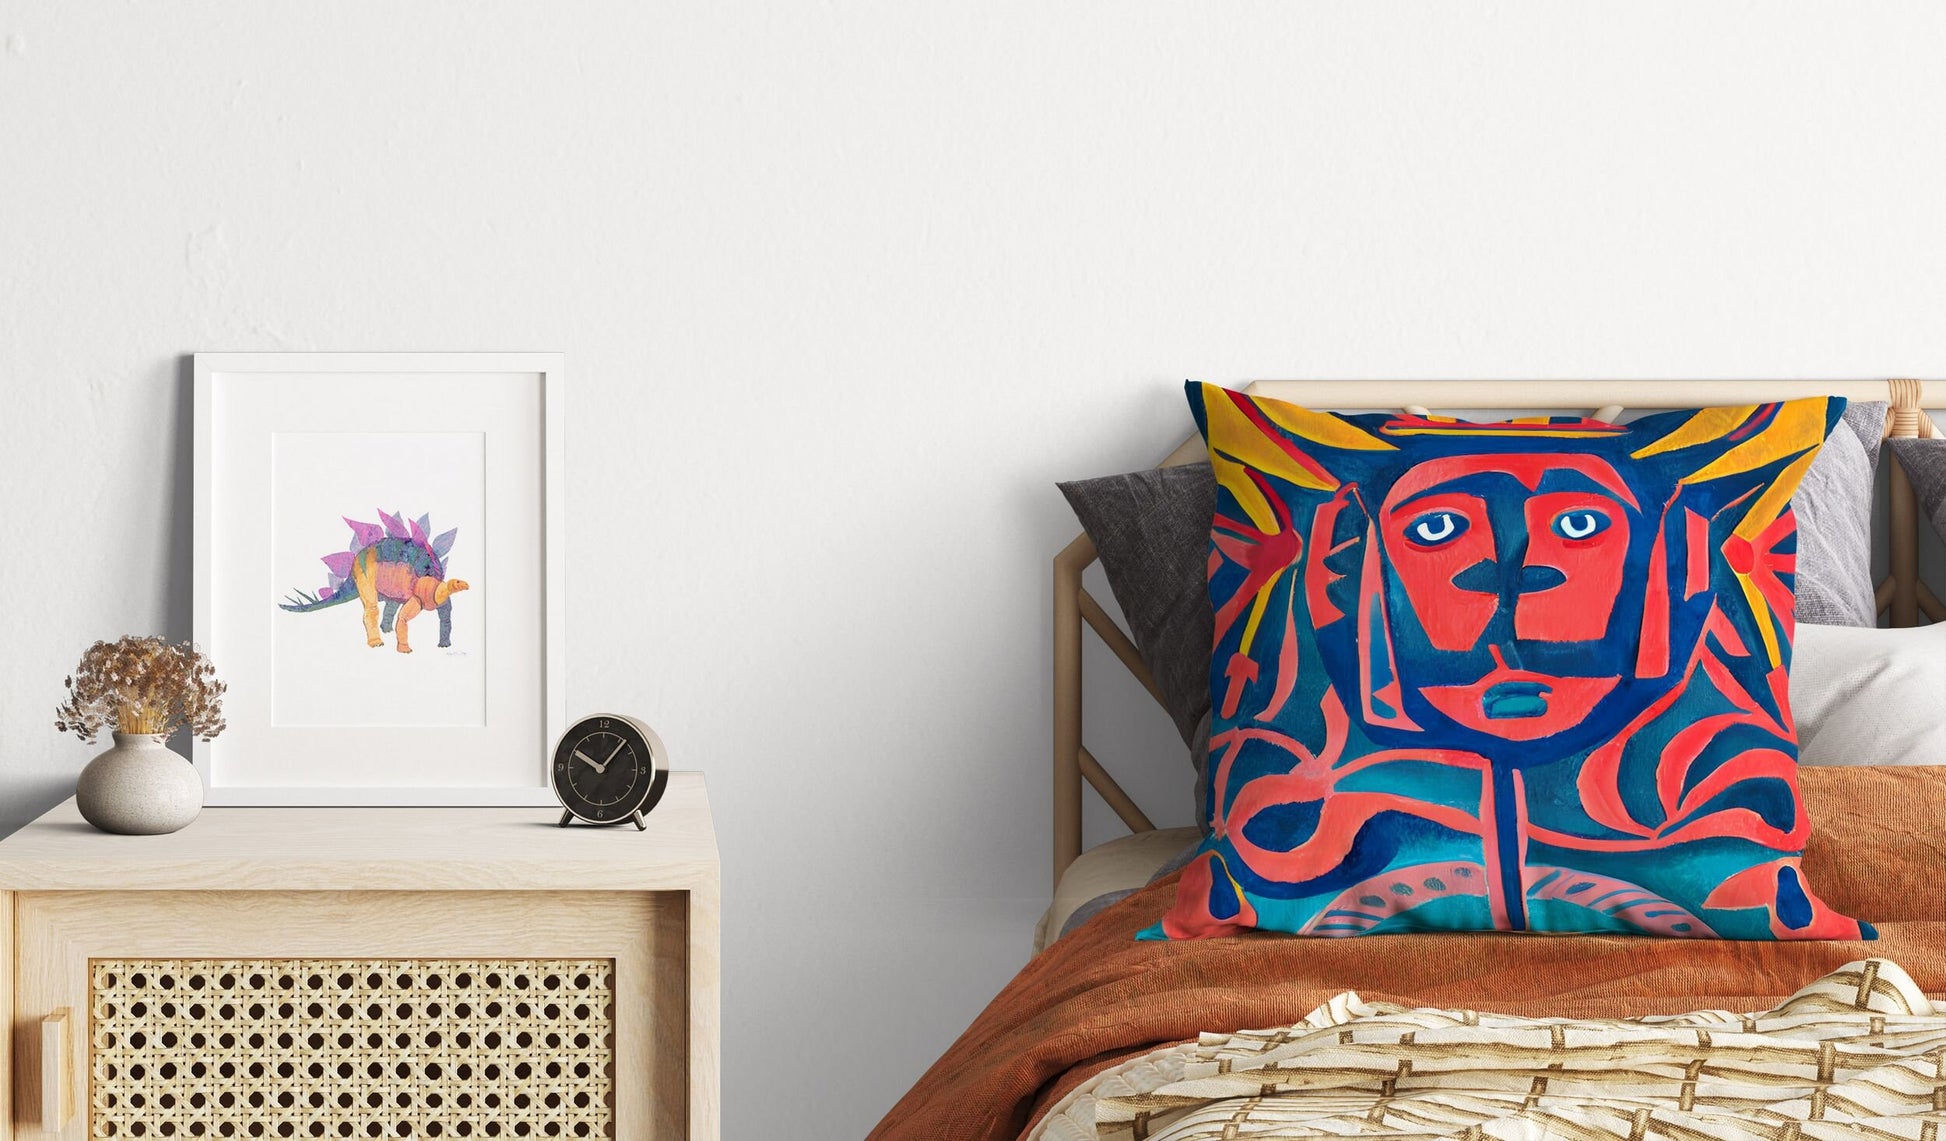 Mayan Chiefs, Decorative Pillow, Abstract Throw Pillow Cover, Artist Pillow, Colorful Pillow Case, Beautiful Pillow, 20X20 Pillow Cover